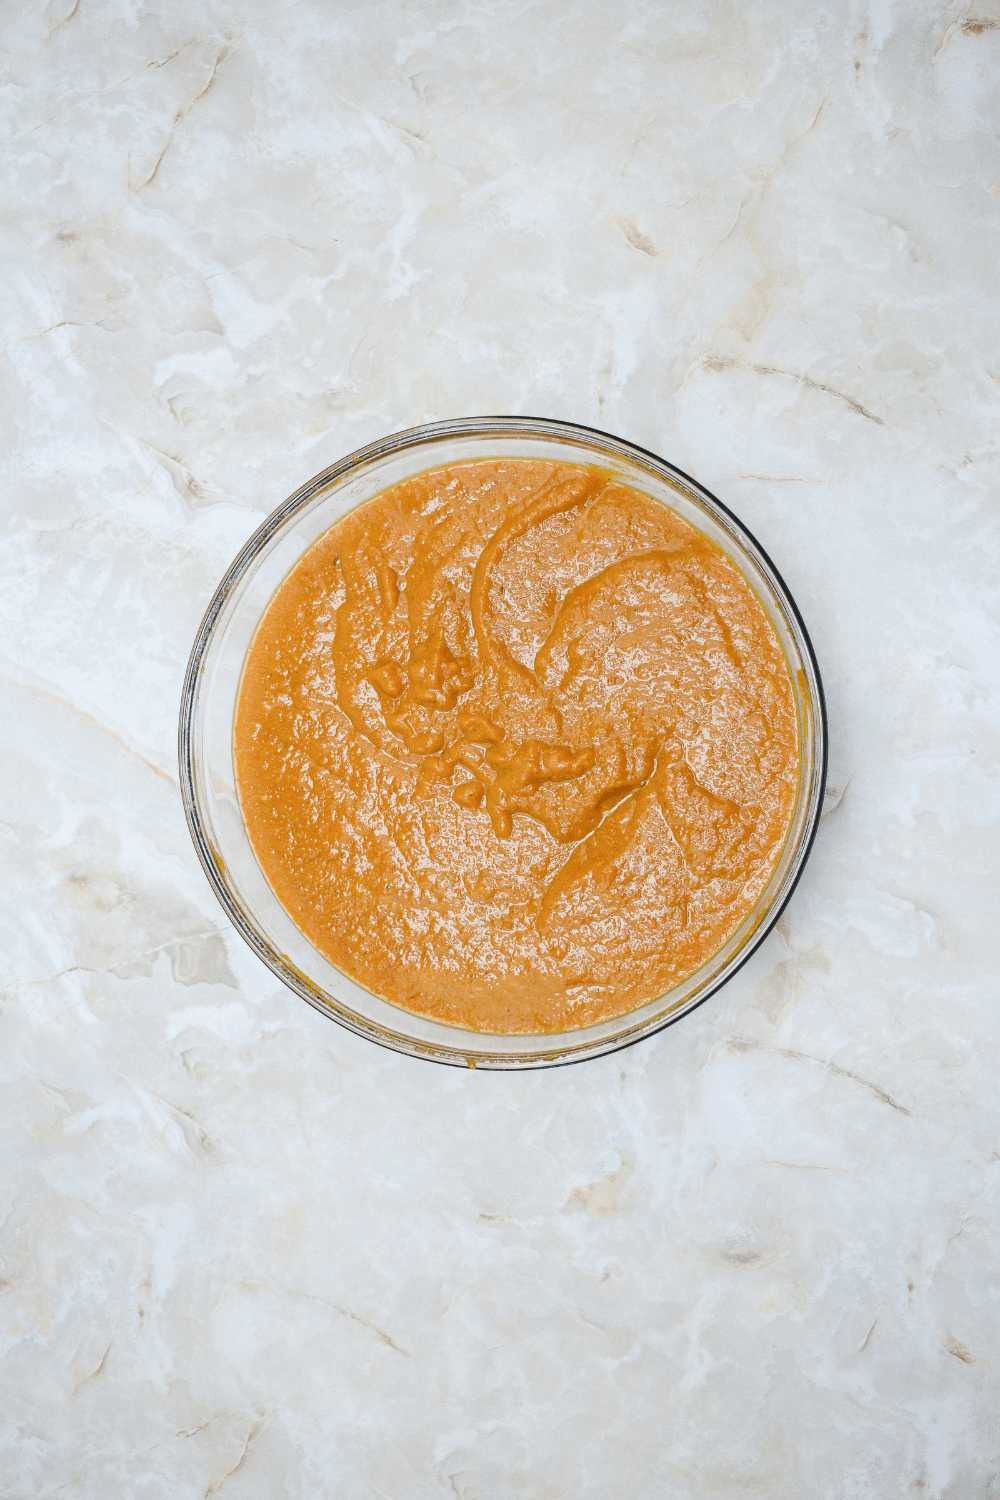 pureed pumpkin cobbler mix in bowl